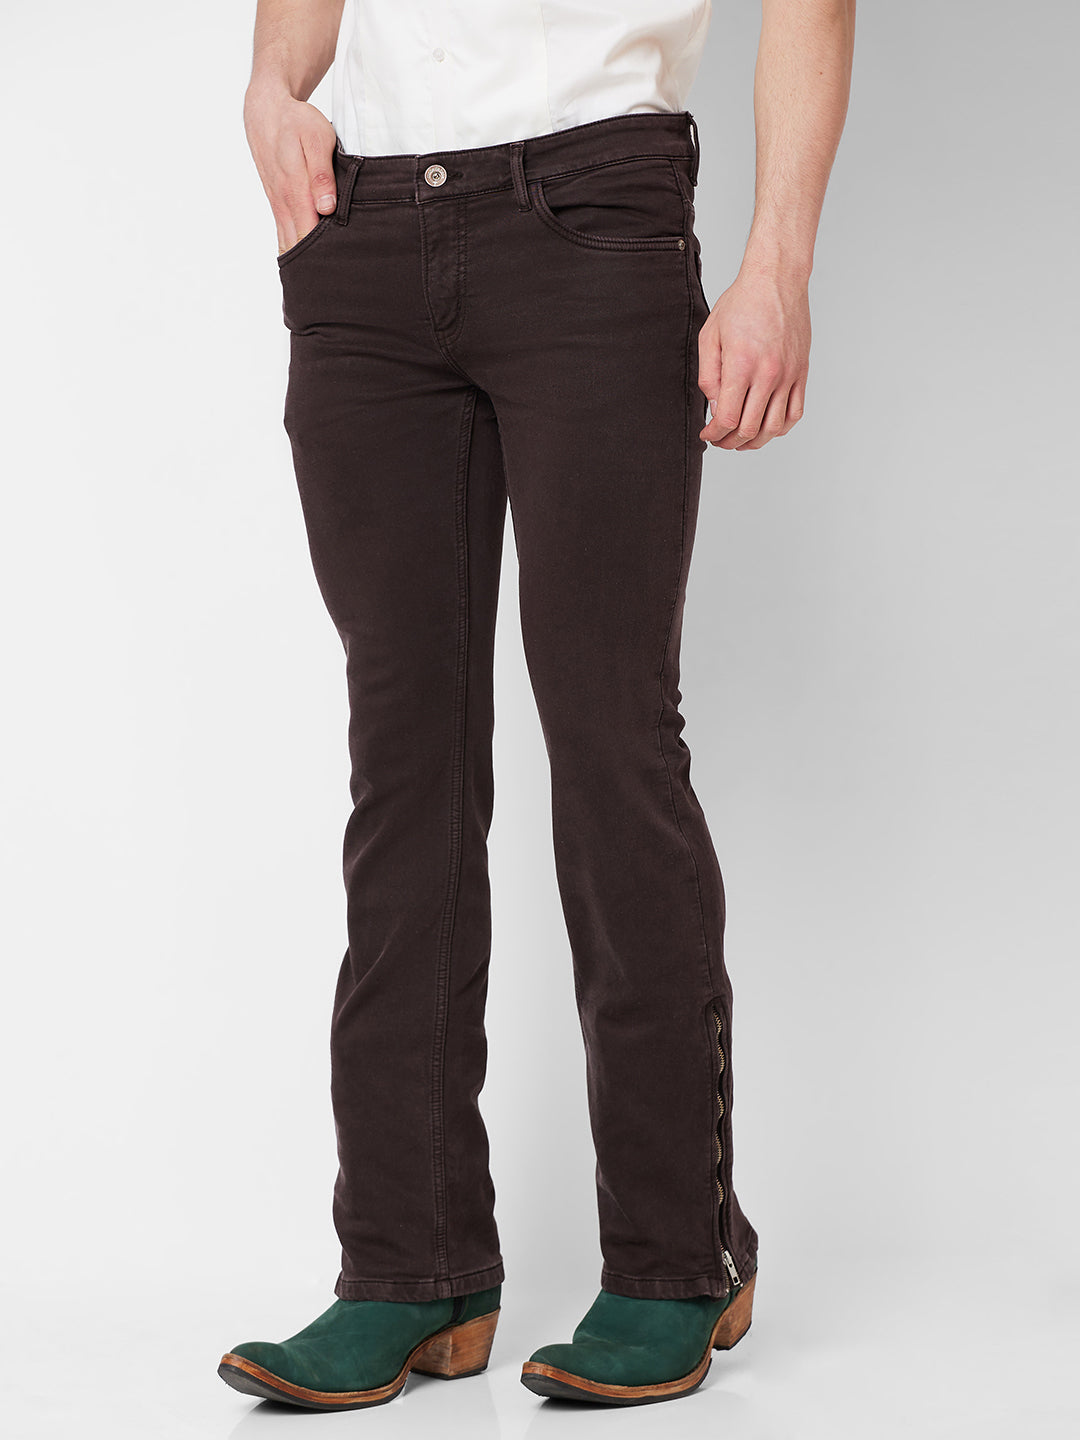 Details more than 233 brown denim jeans men’s best